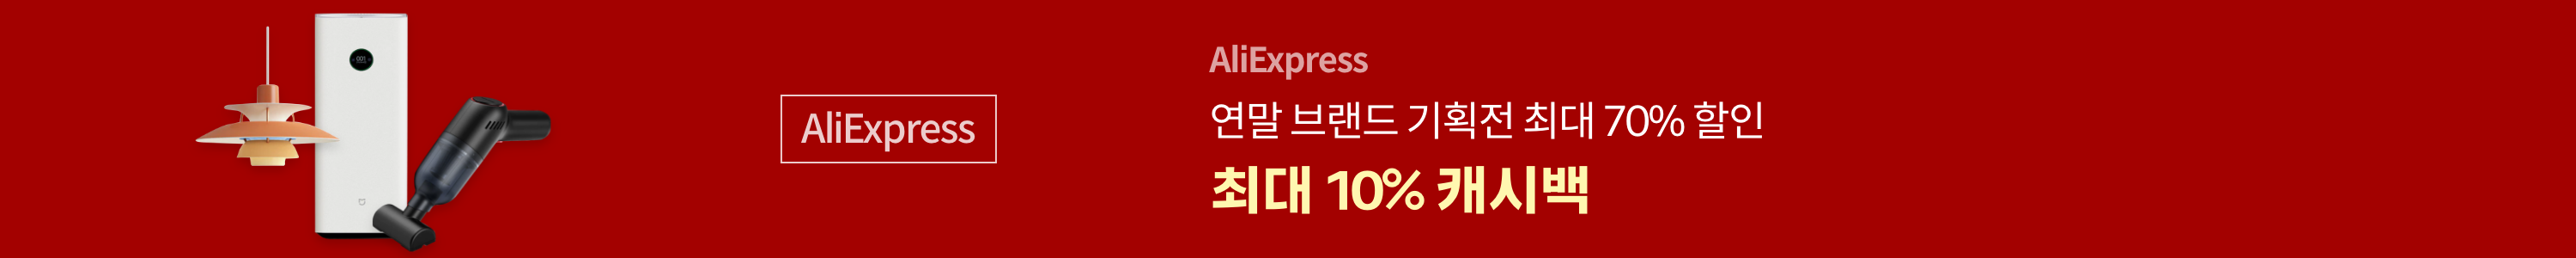 aliexpress_bar-banner_newyearpromo_live_web